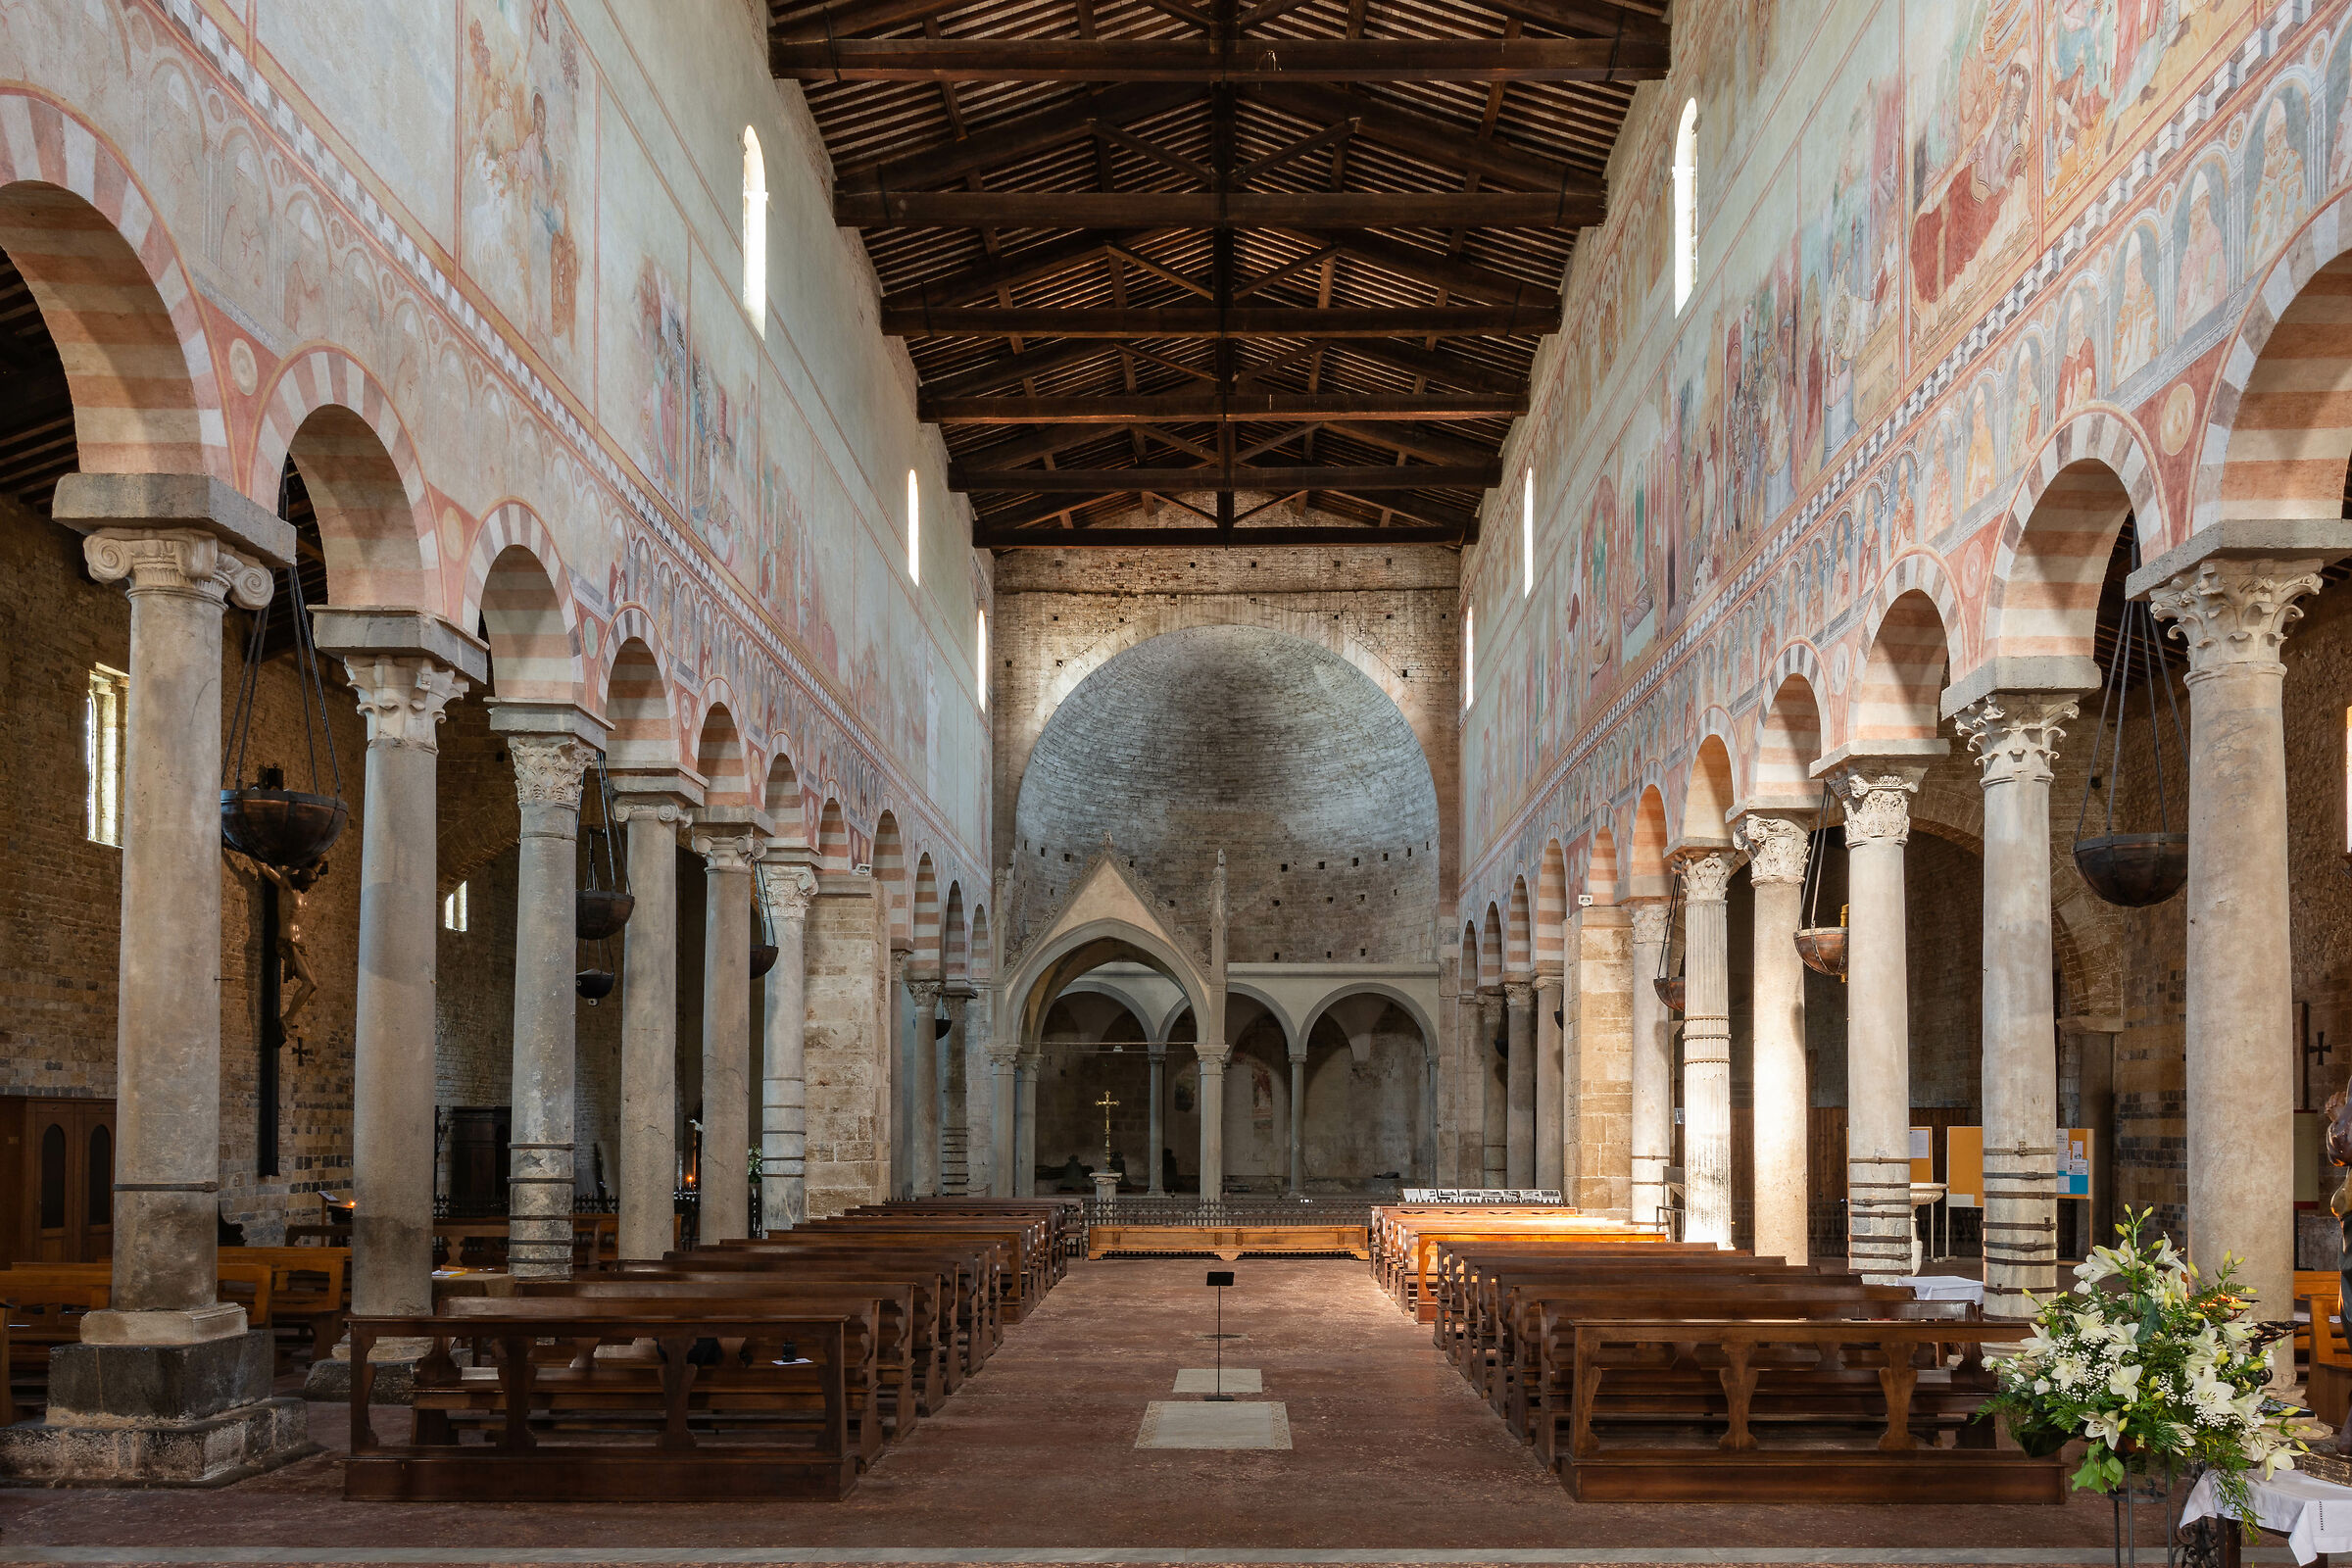 St. Piero to Grade interior basilica...